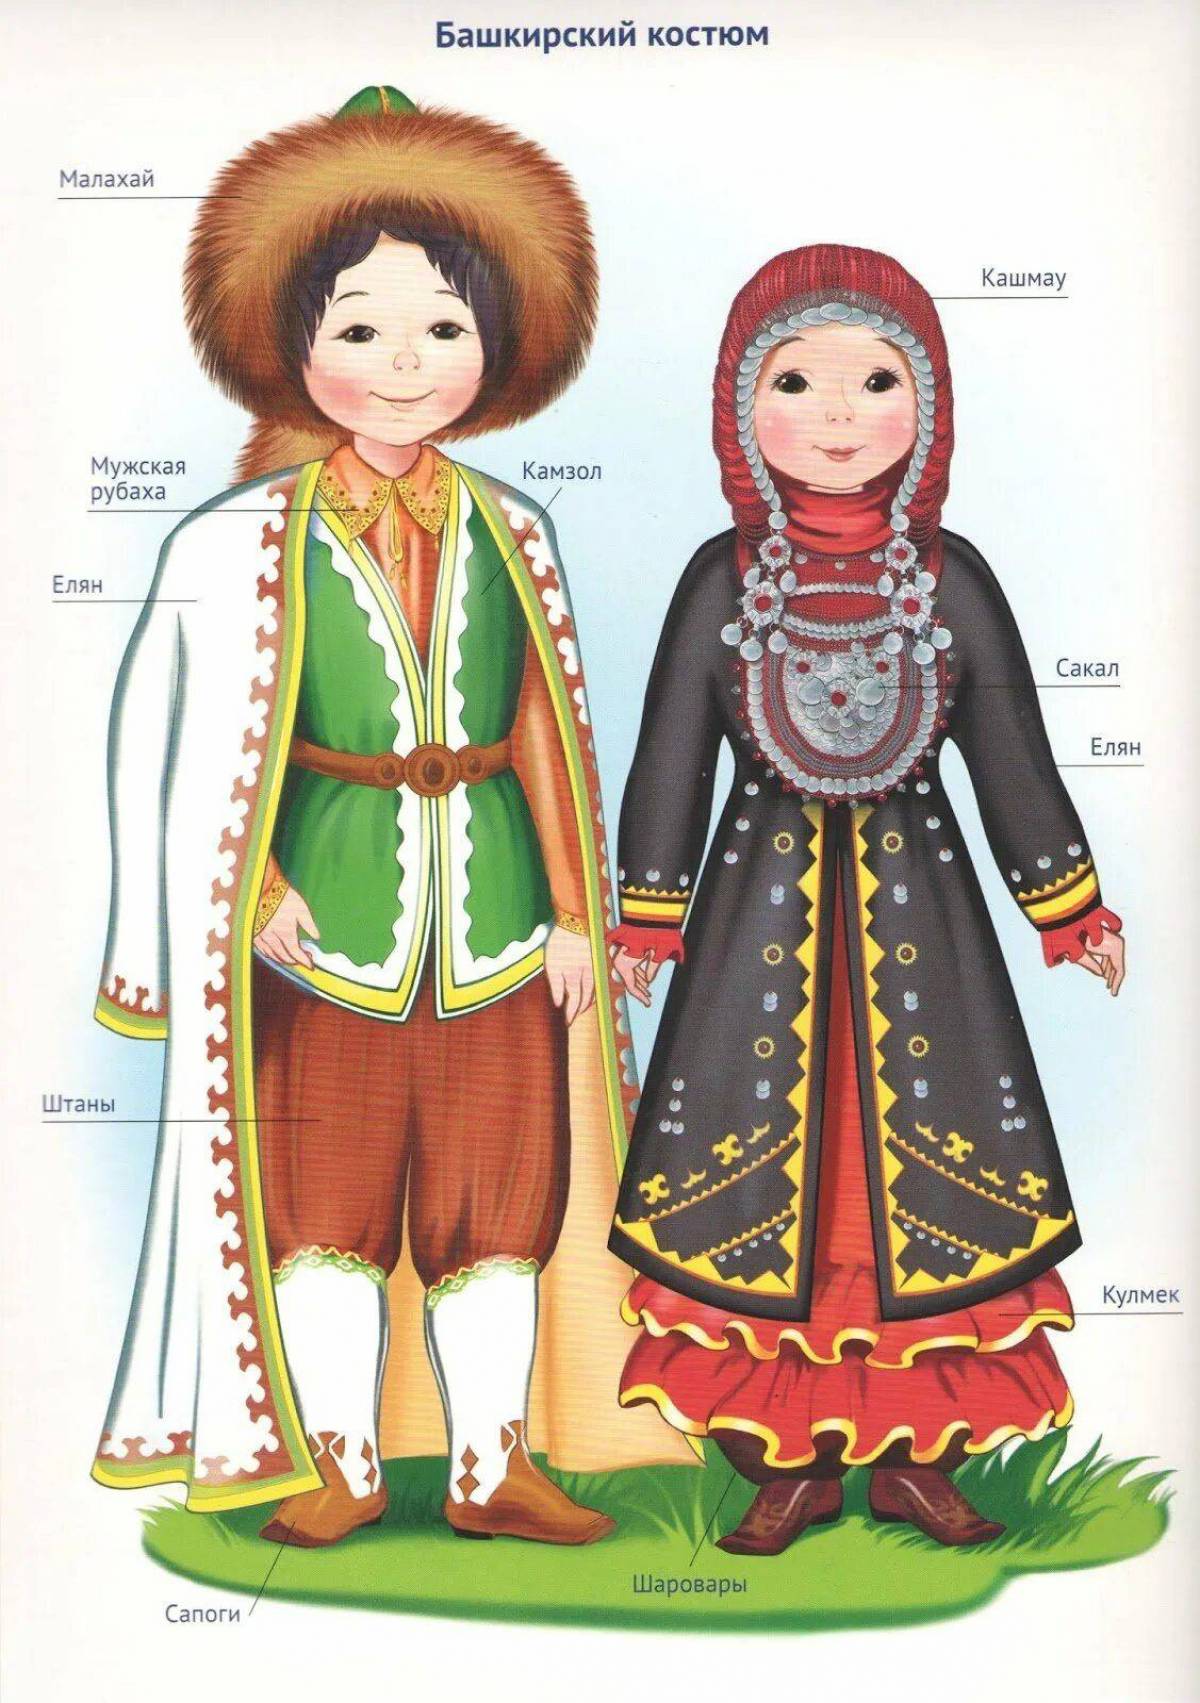 Башкирский костюм #25